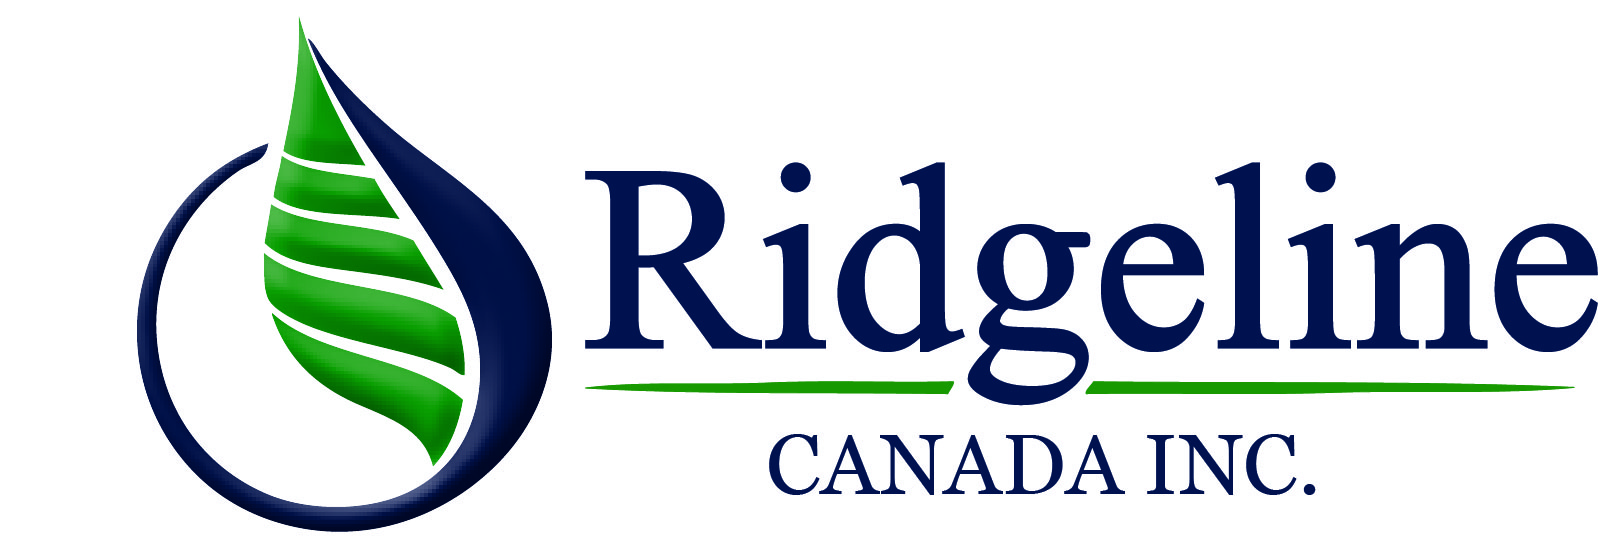 Ridgeline Canada